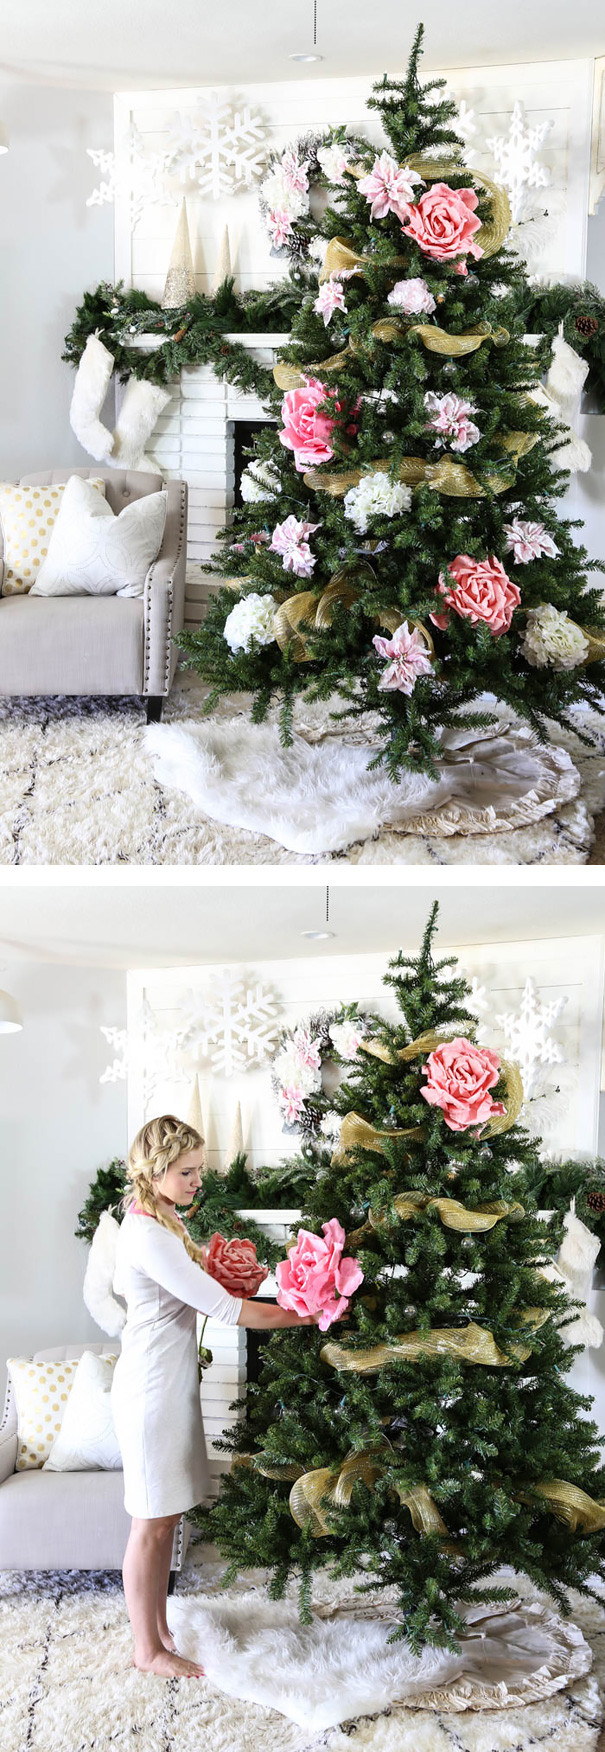 Christmas Tree Flower Decorations
 People Use Flowers To Decorate Their Christmas Trees And